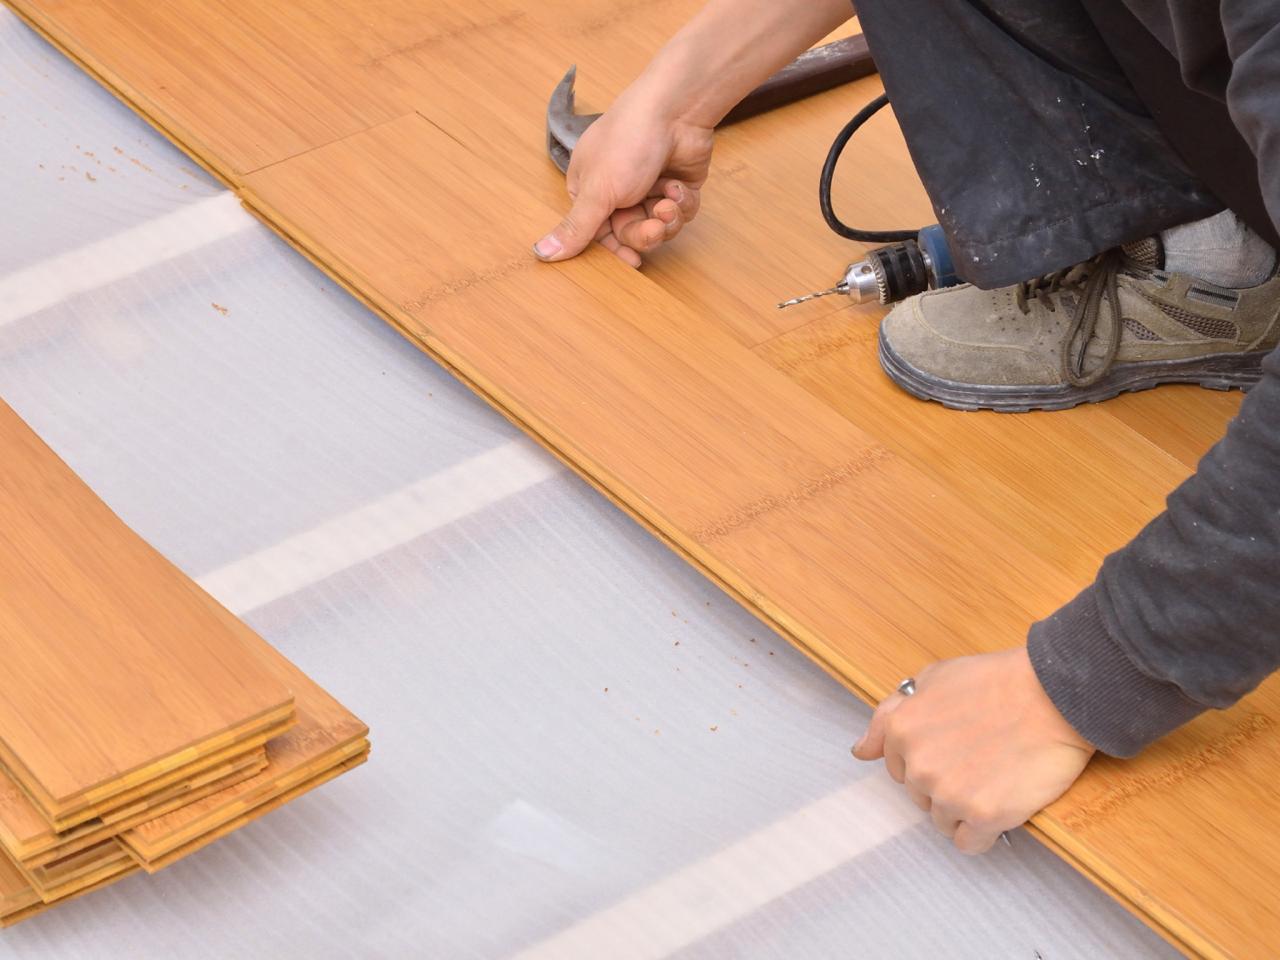 Bamboo Floor Installation Diy, Cost Of Bamboo Flooring Compared To Hardwood